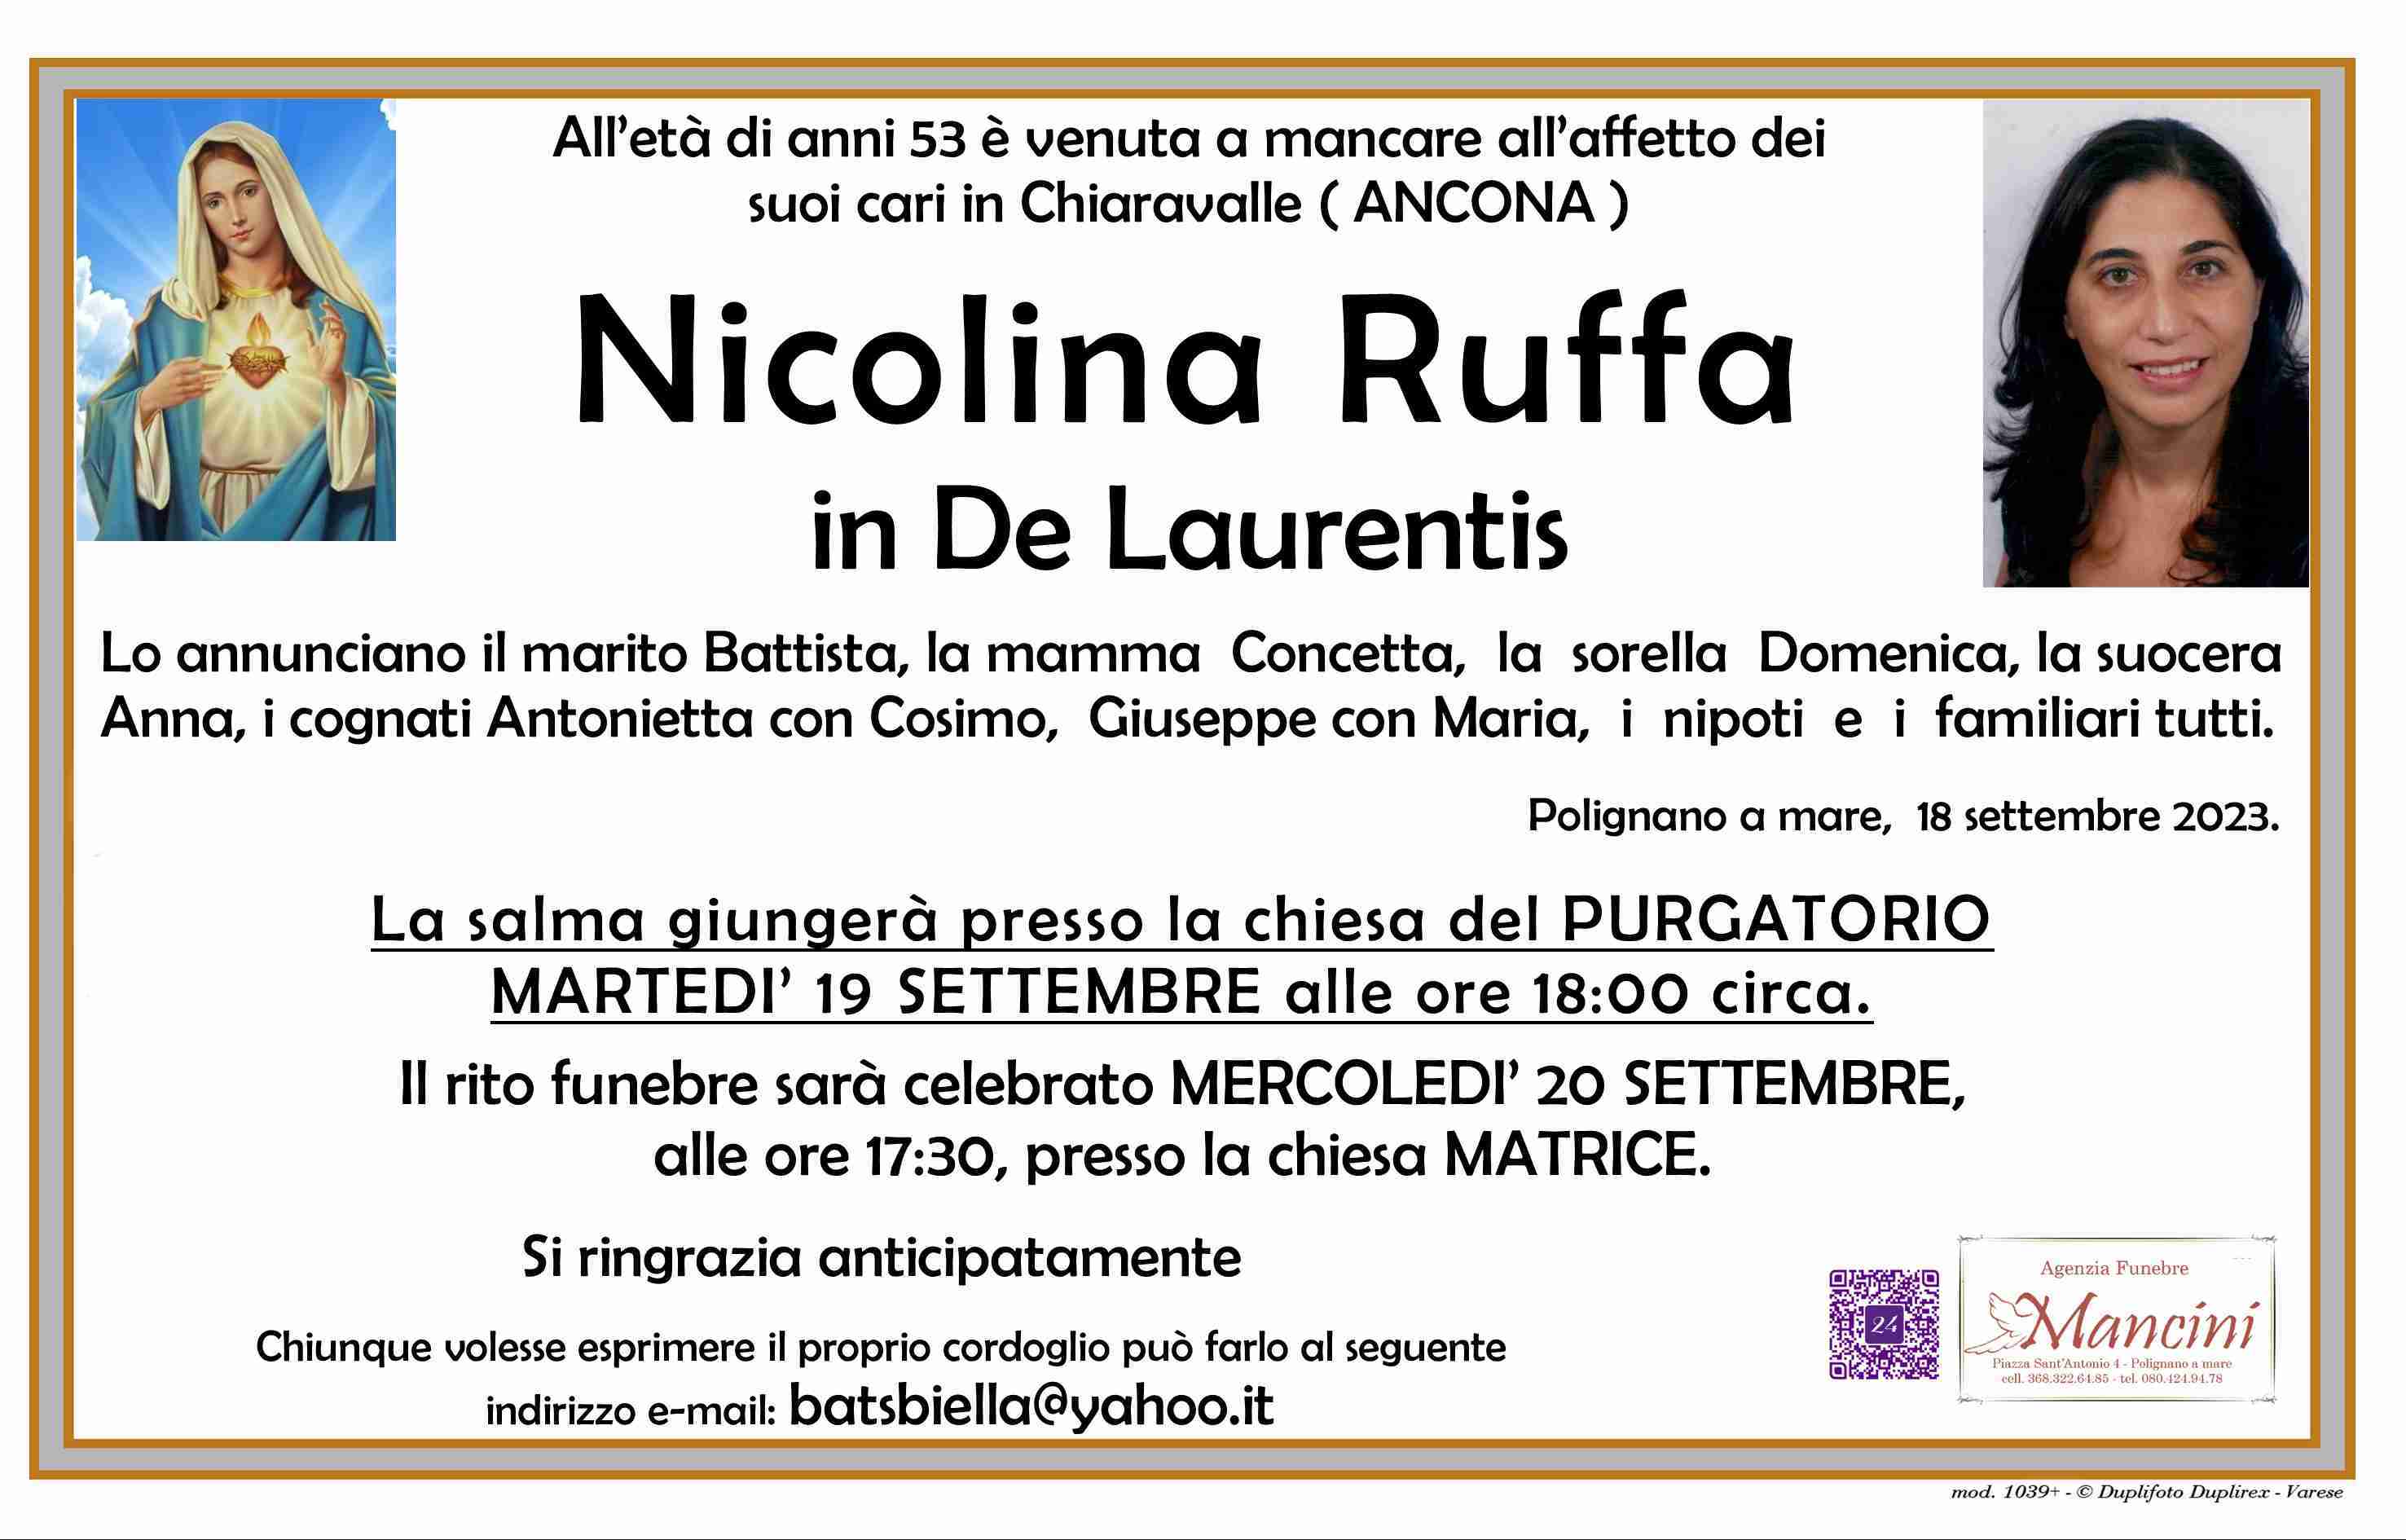 Nicolina Ruffa